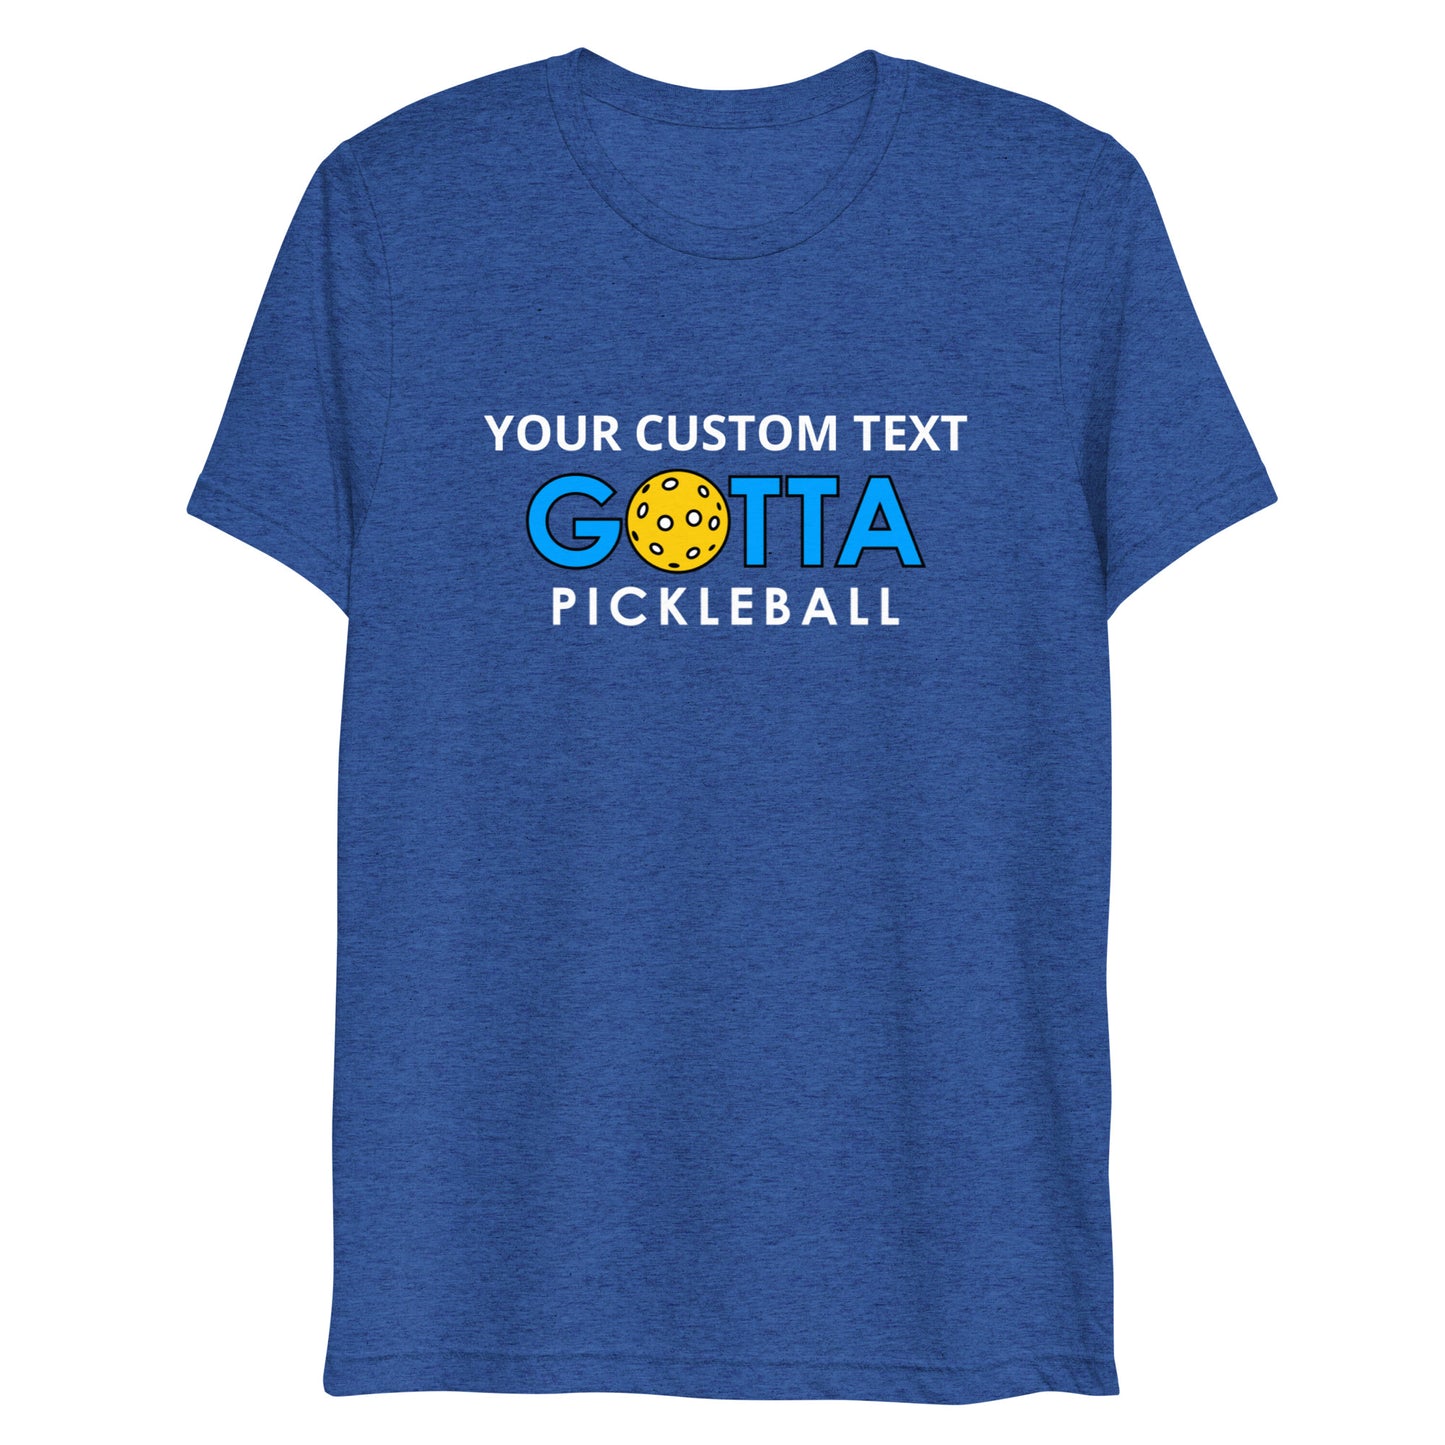 PERSONALIZED PICKLEBALL T-SHIRT: UNISEX: Add your custom text over BLUE GOTTA PICKLEBALL LOGO